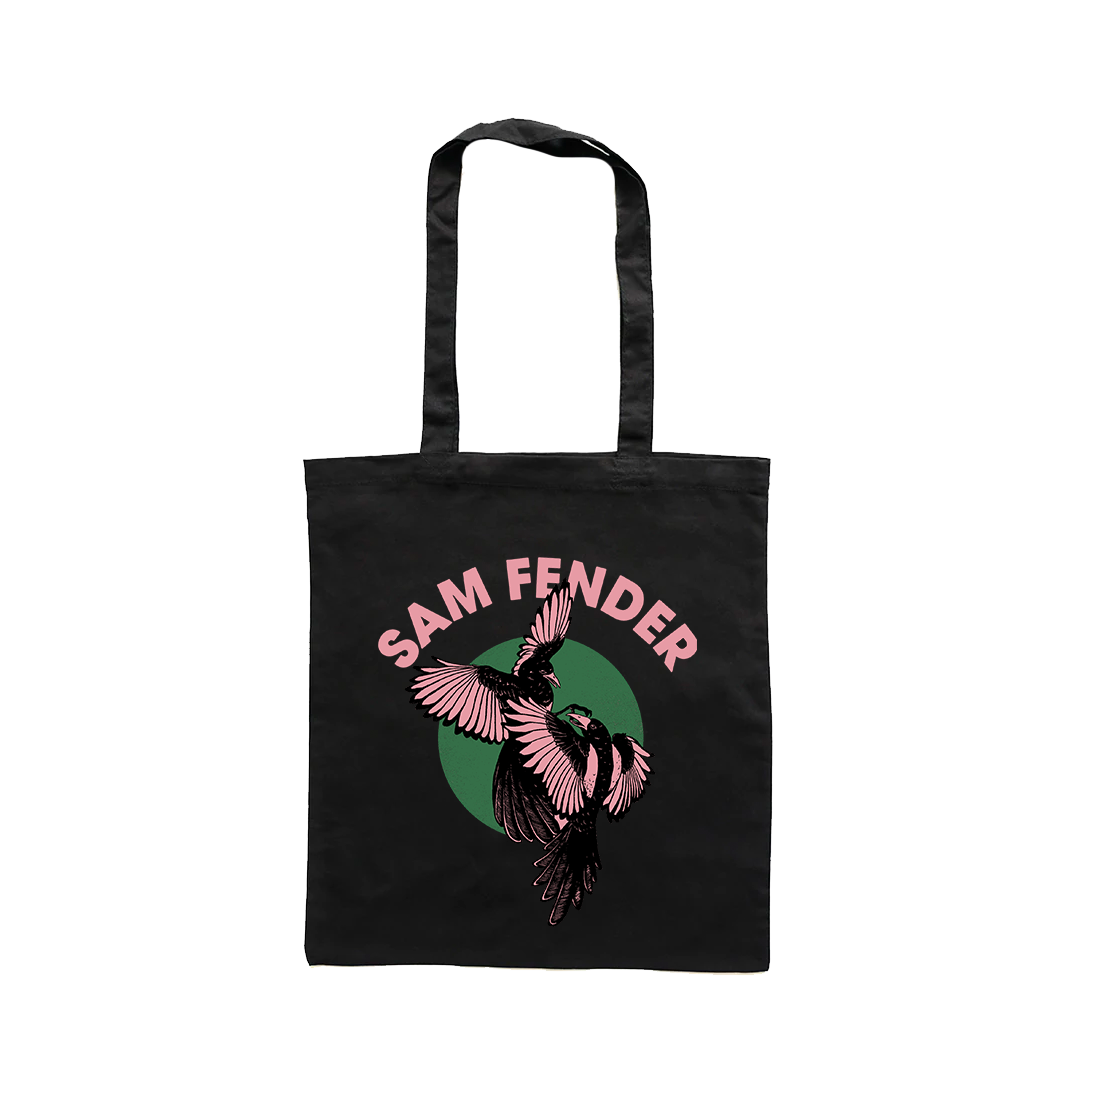 Sam Fender - Magpie Tote Bag